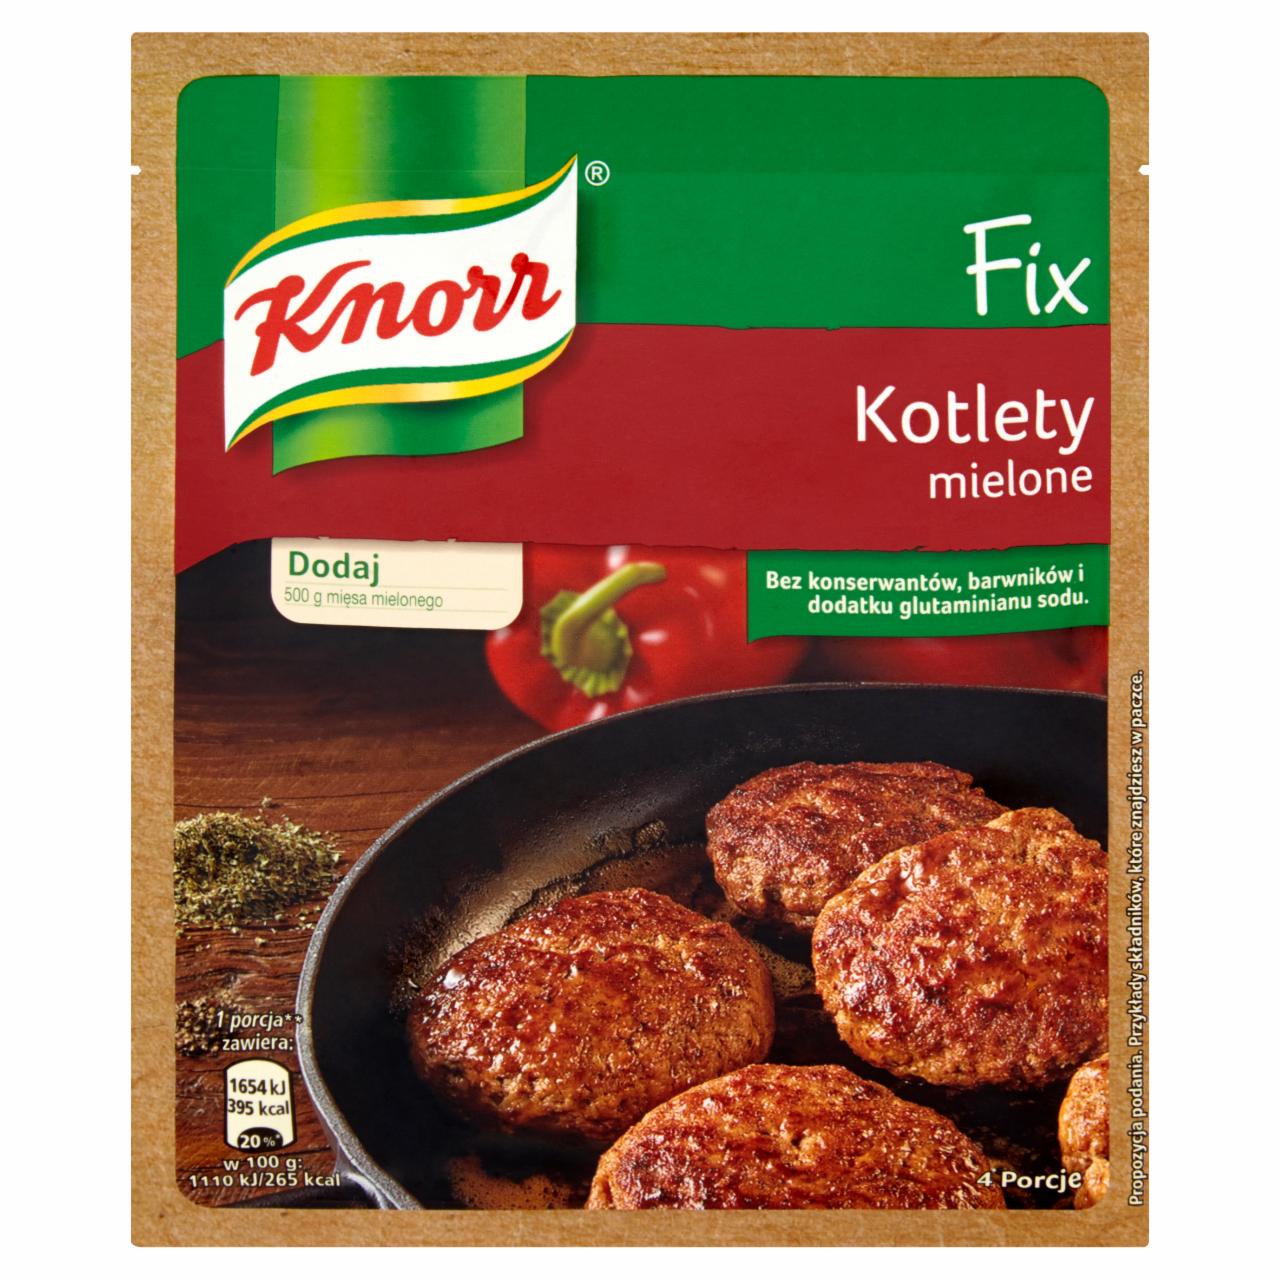 Zdjęcia - Knorr Fix kotlety mielone 64 g